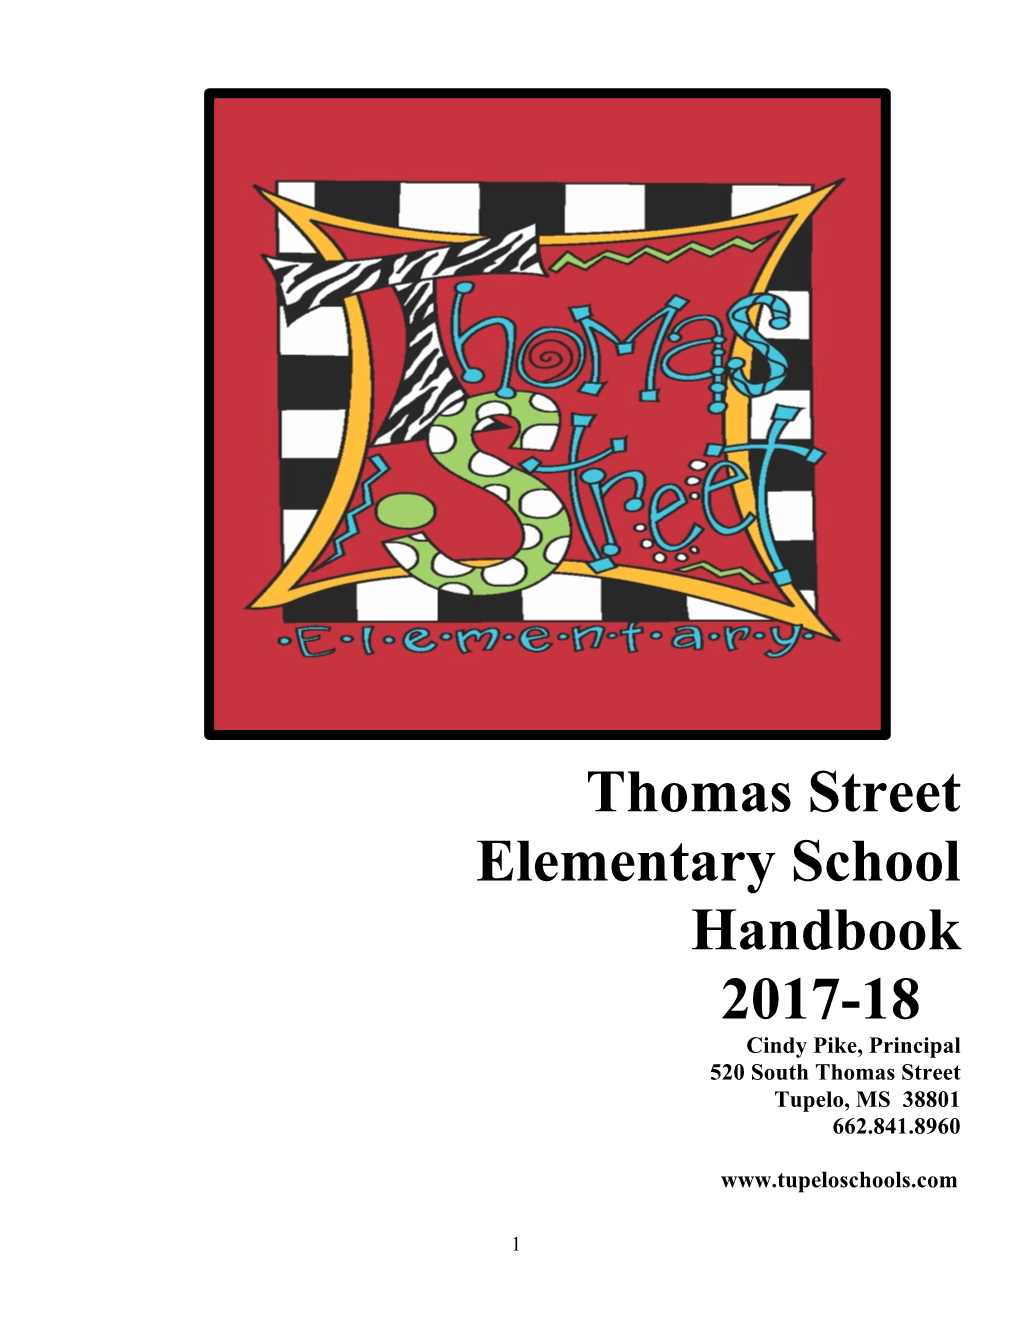 Thomas Street Elementary School Handbook 2017-18